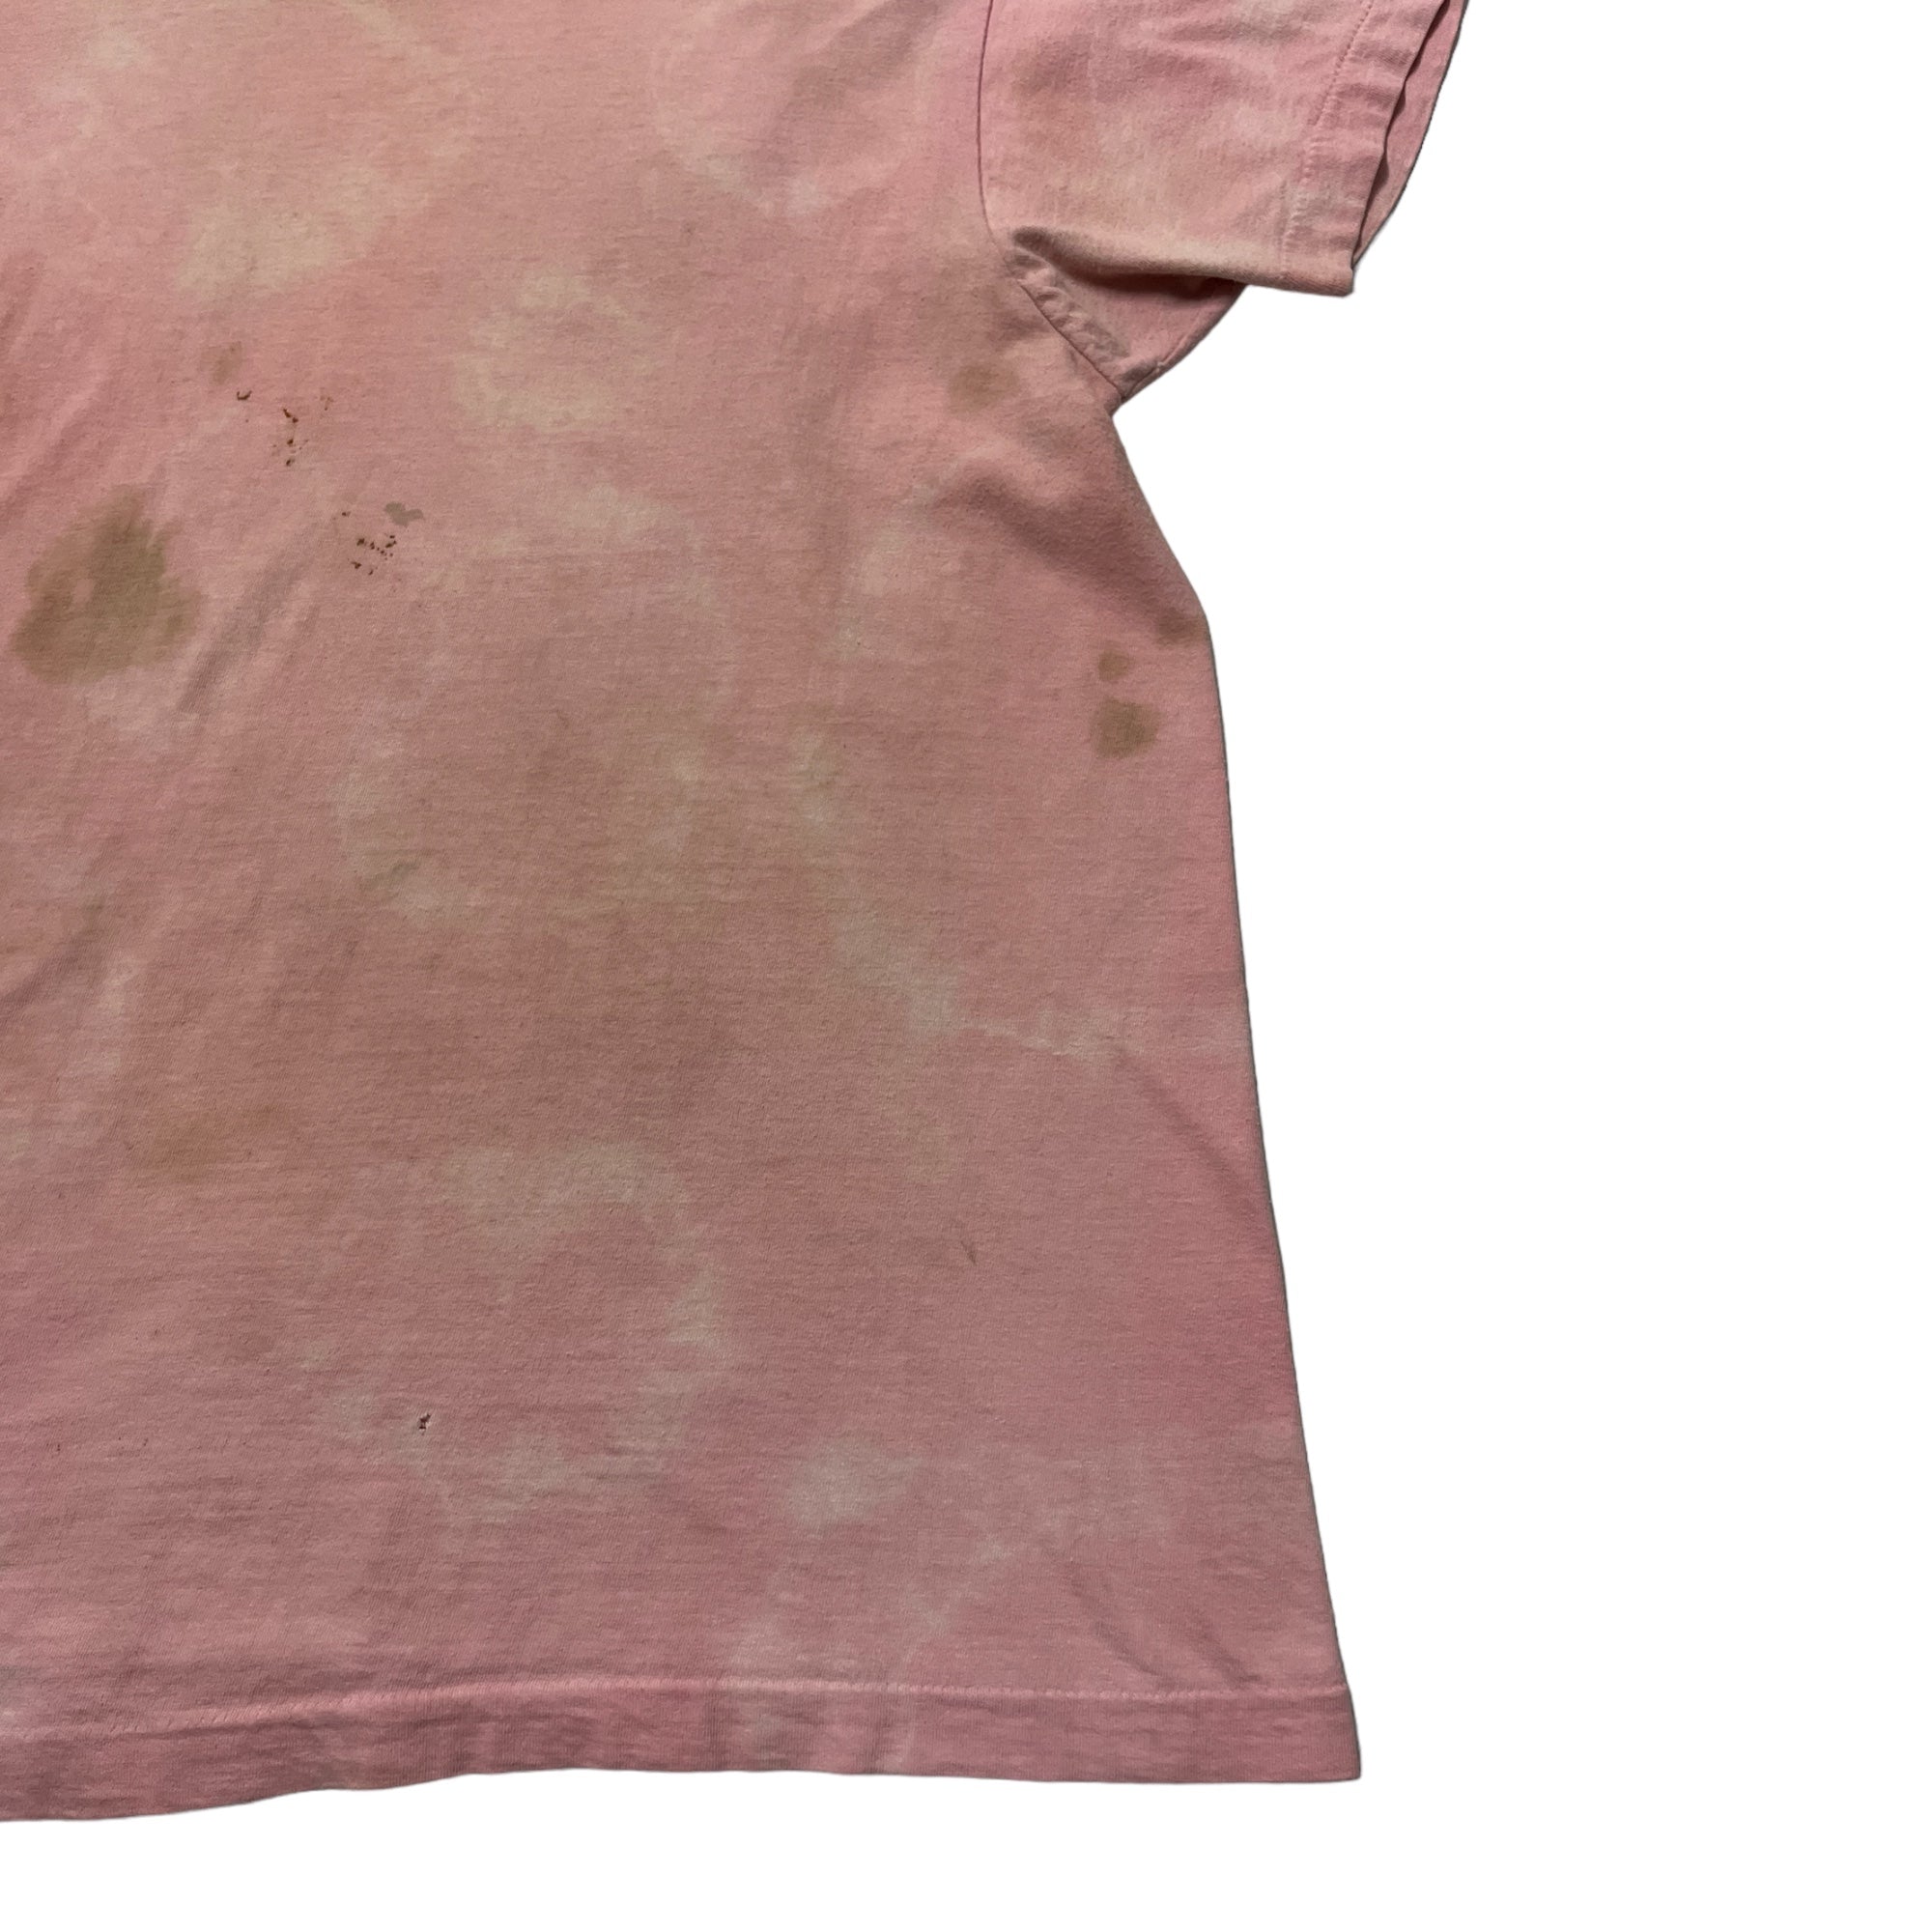 70s/80s Thrashed T-Shirt - Dirty Pink - L/XL